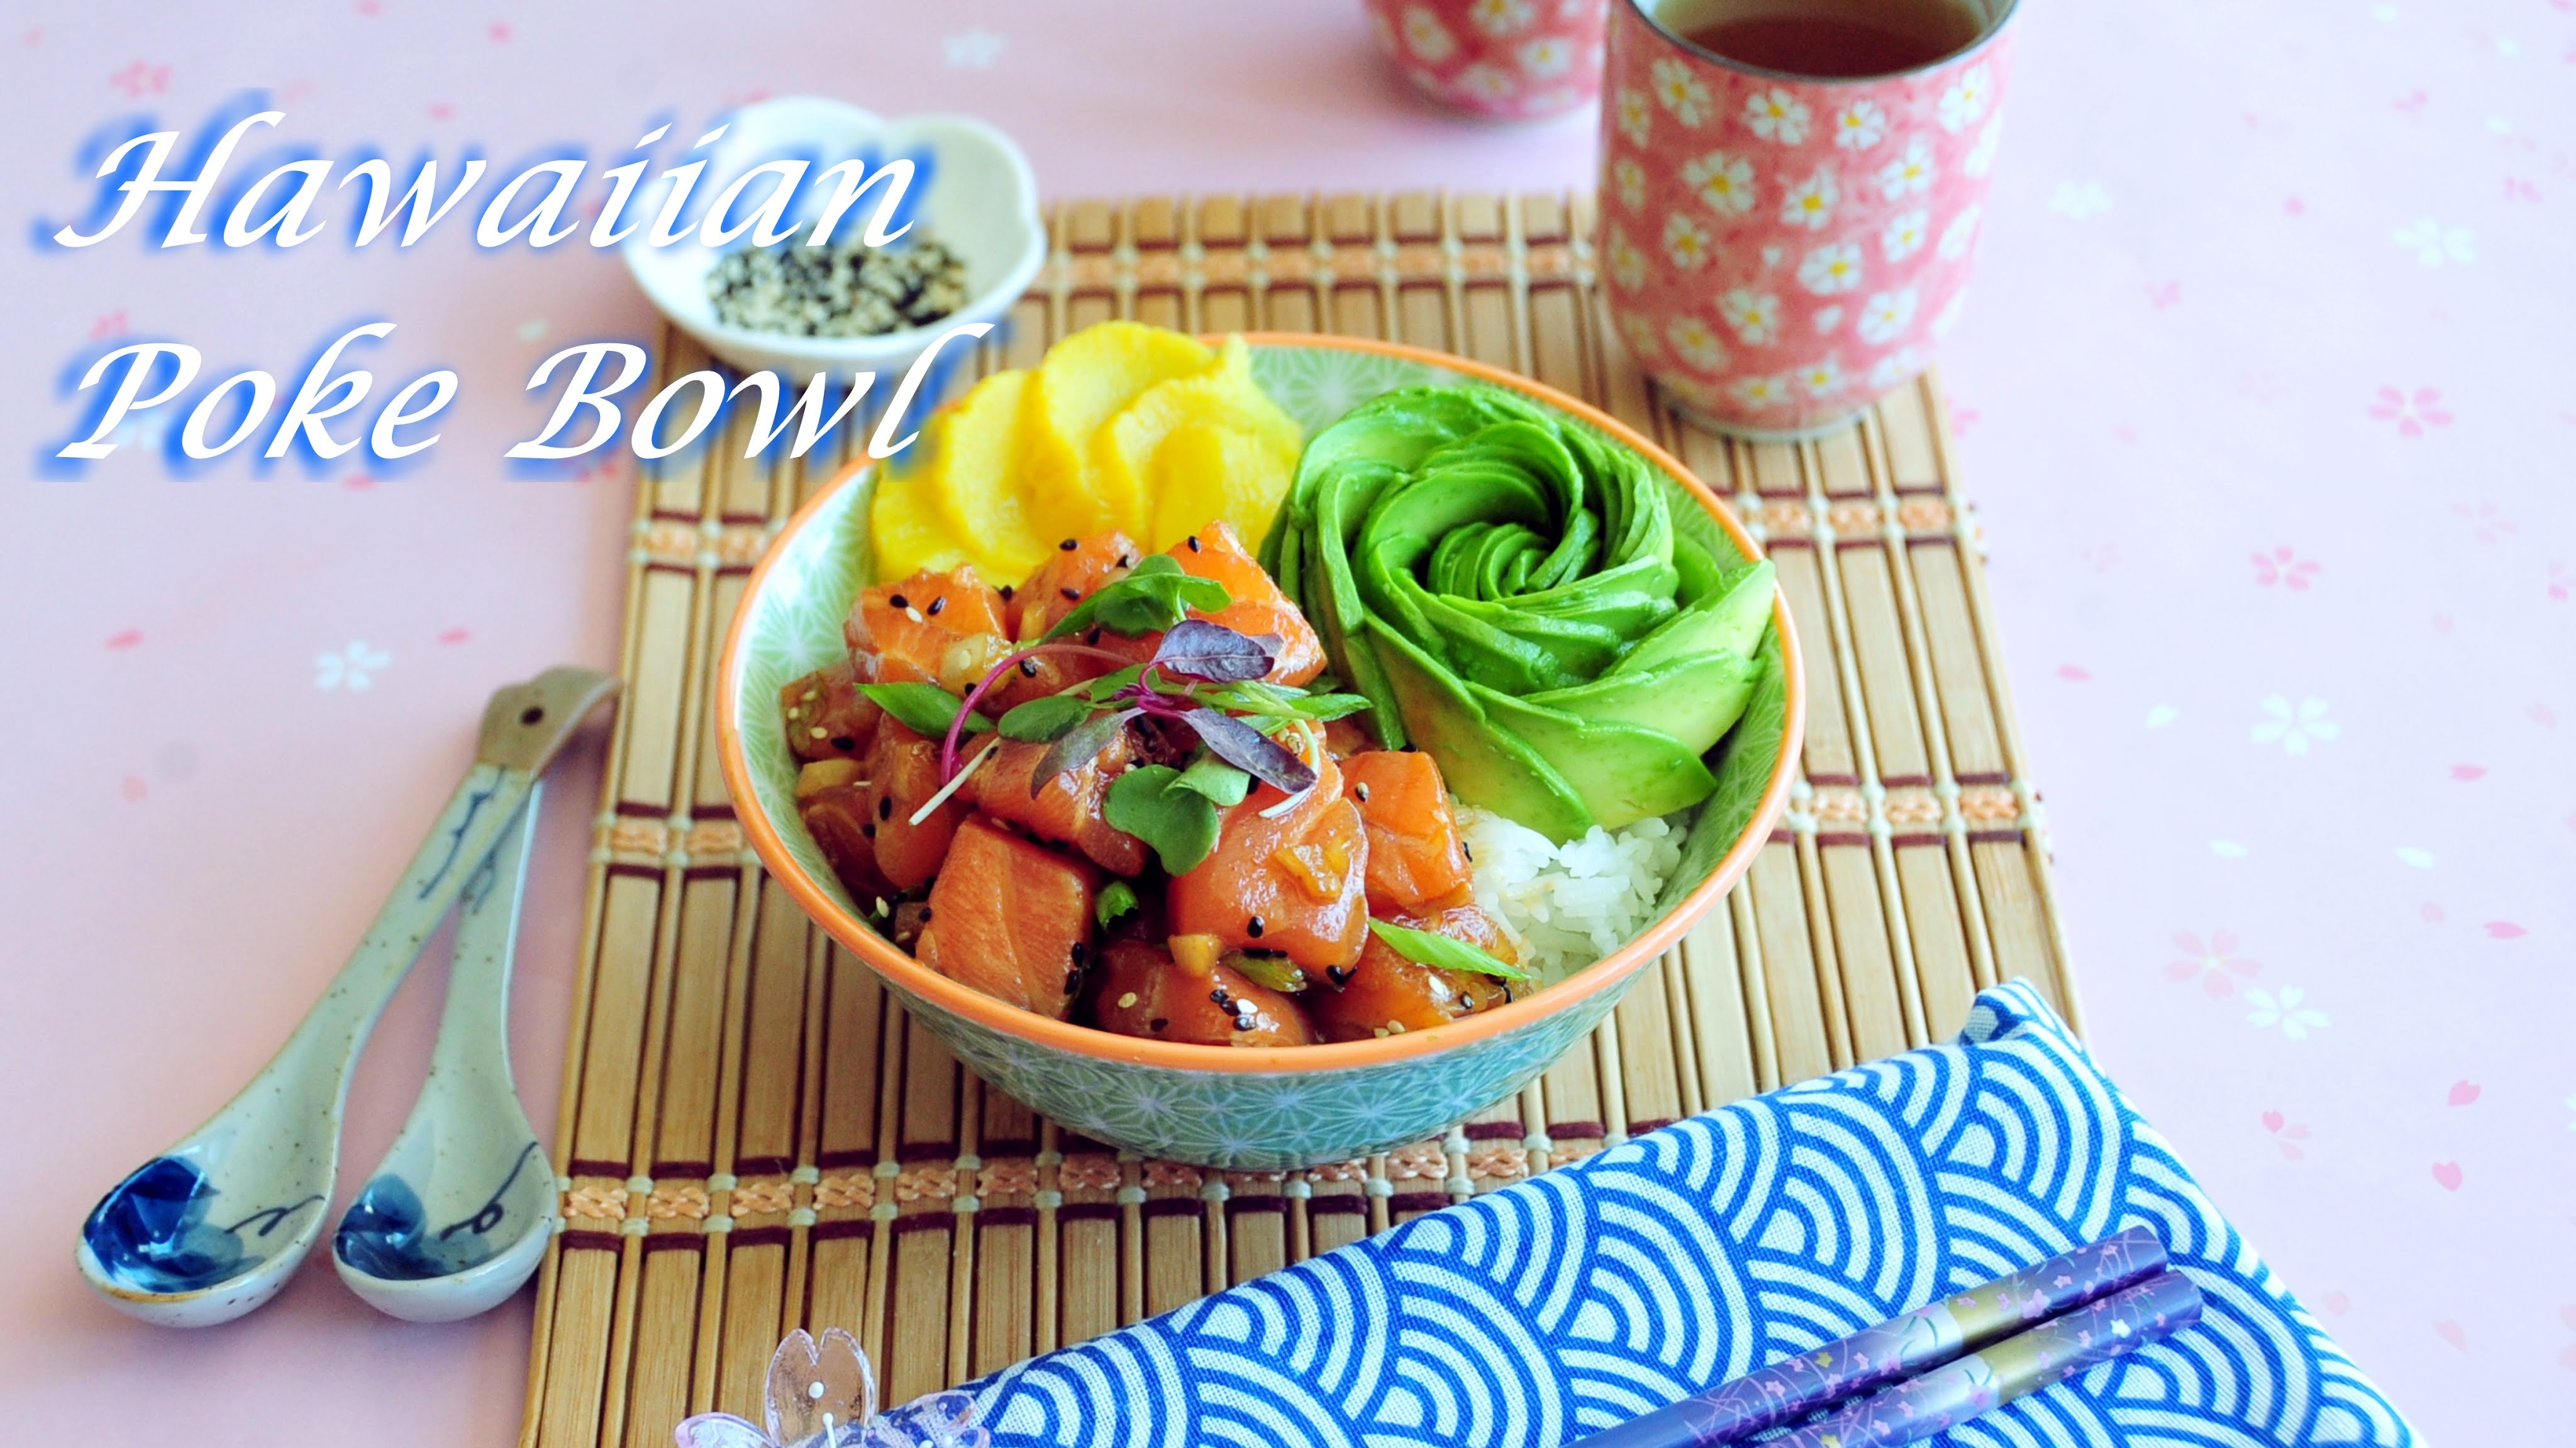 How to Make Spicy Salmon Hawaiian Poke Bowl